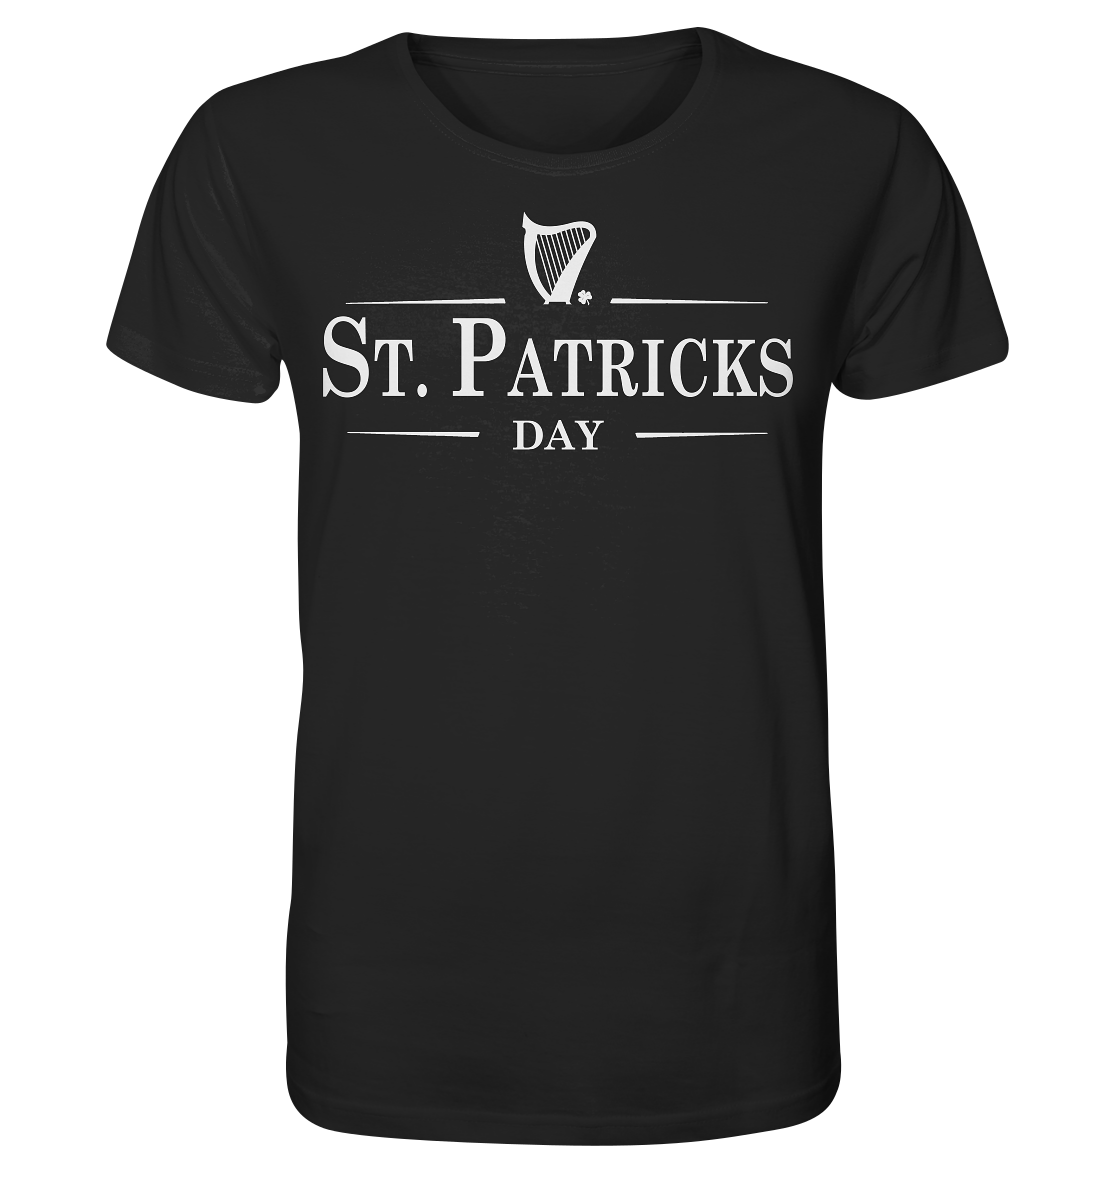 St. Patricks Day "Stout" - Organic Shirt